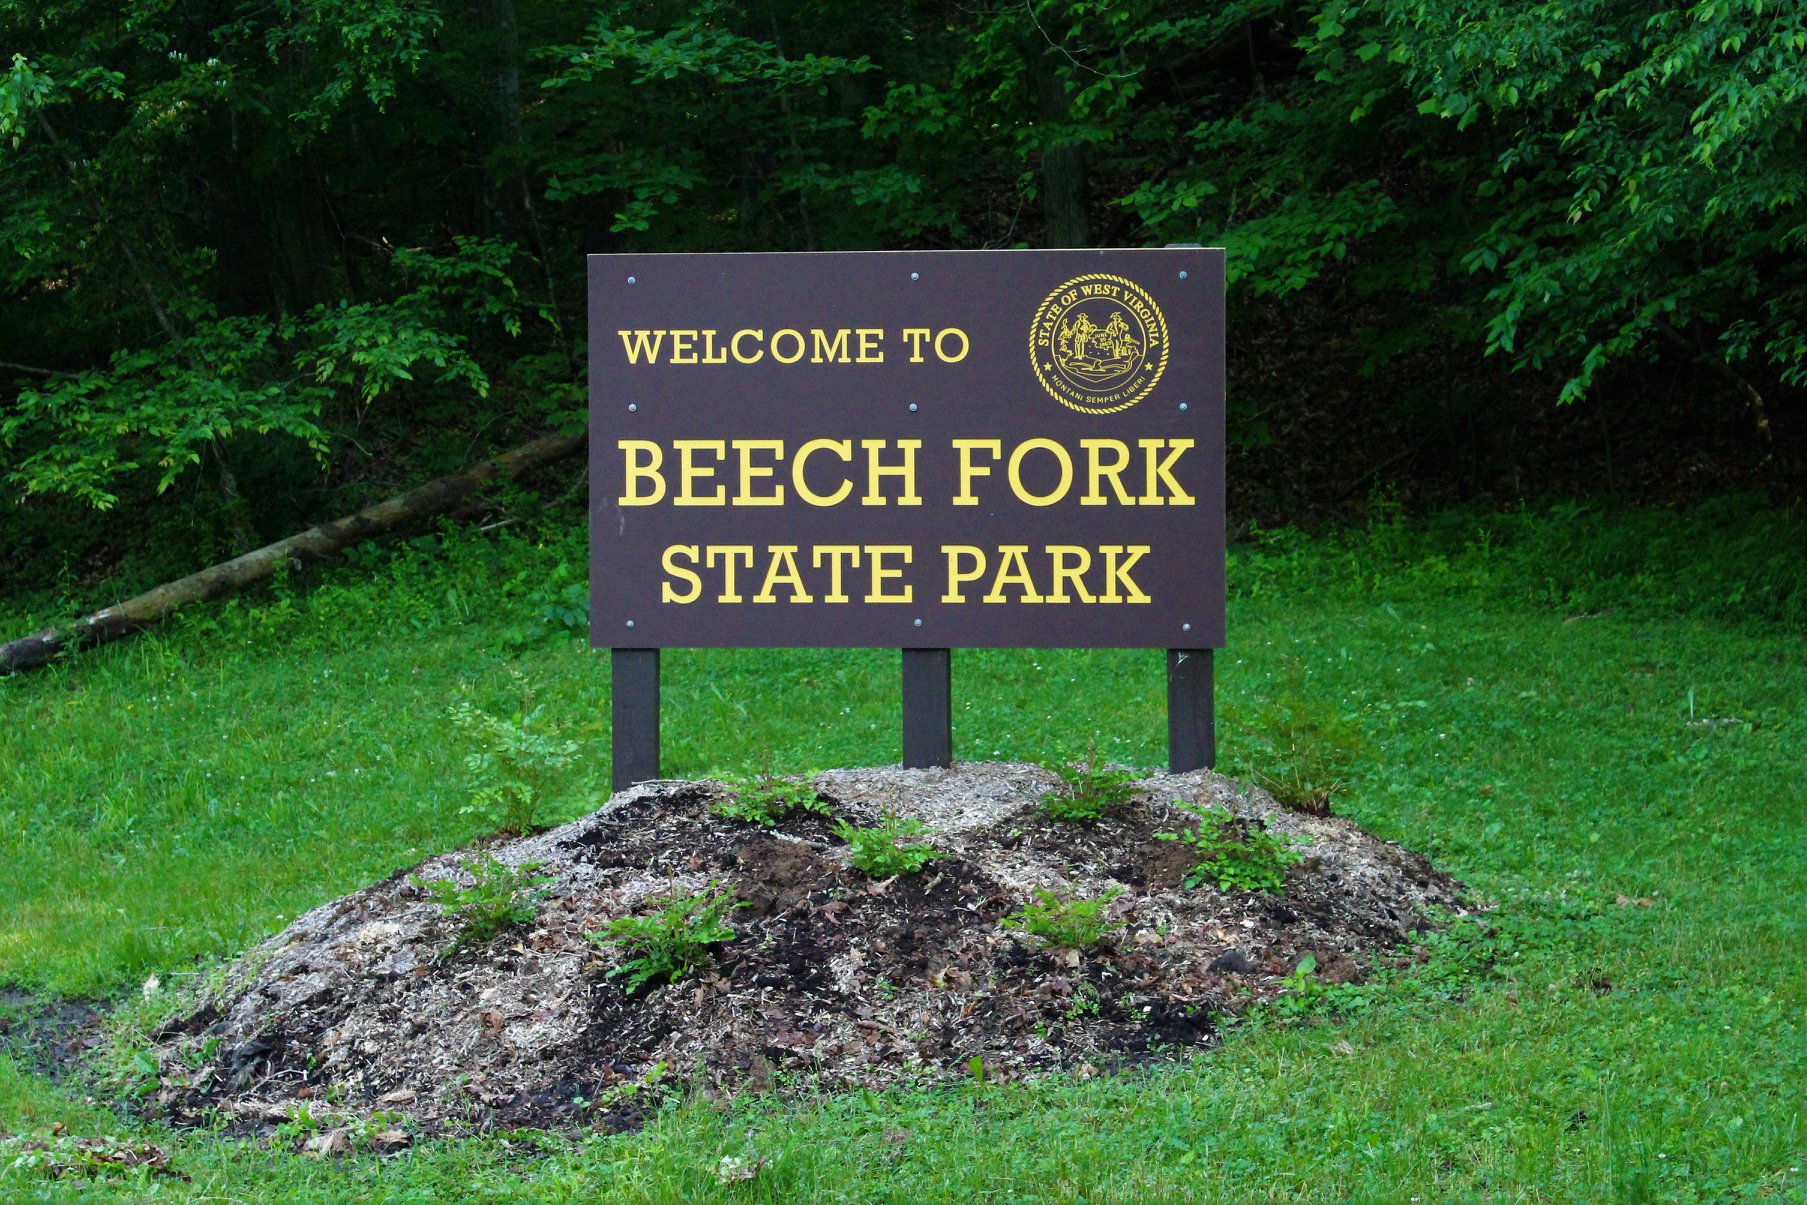 Beech fork state park ukgaret